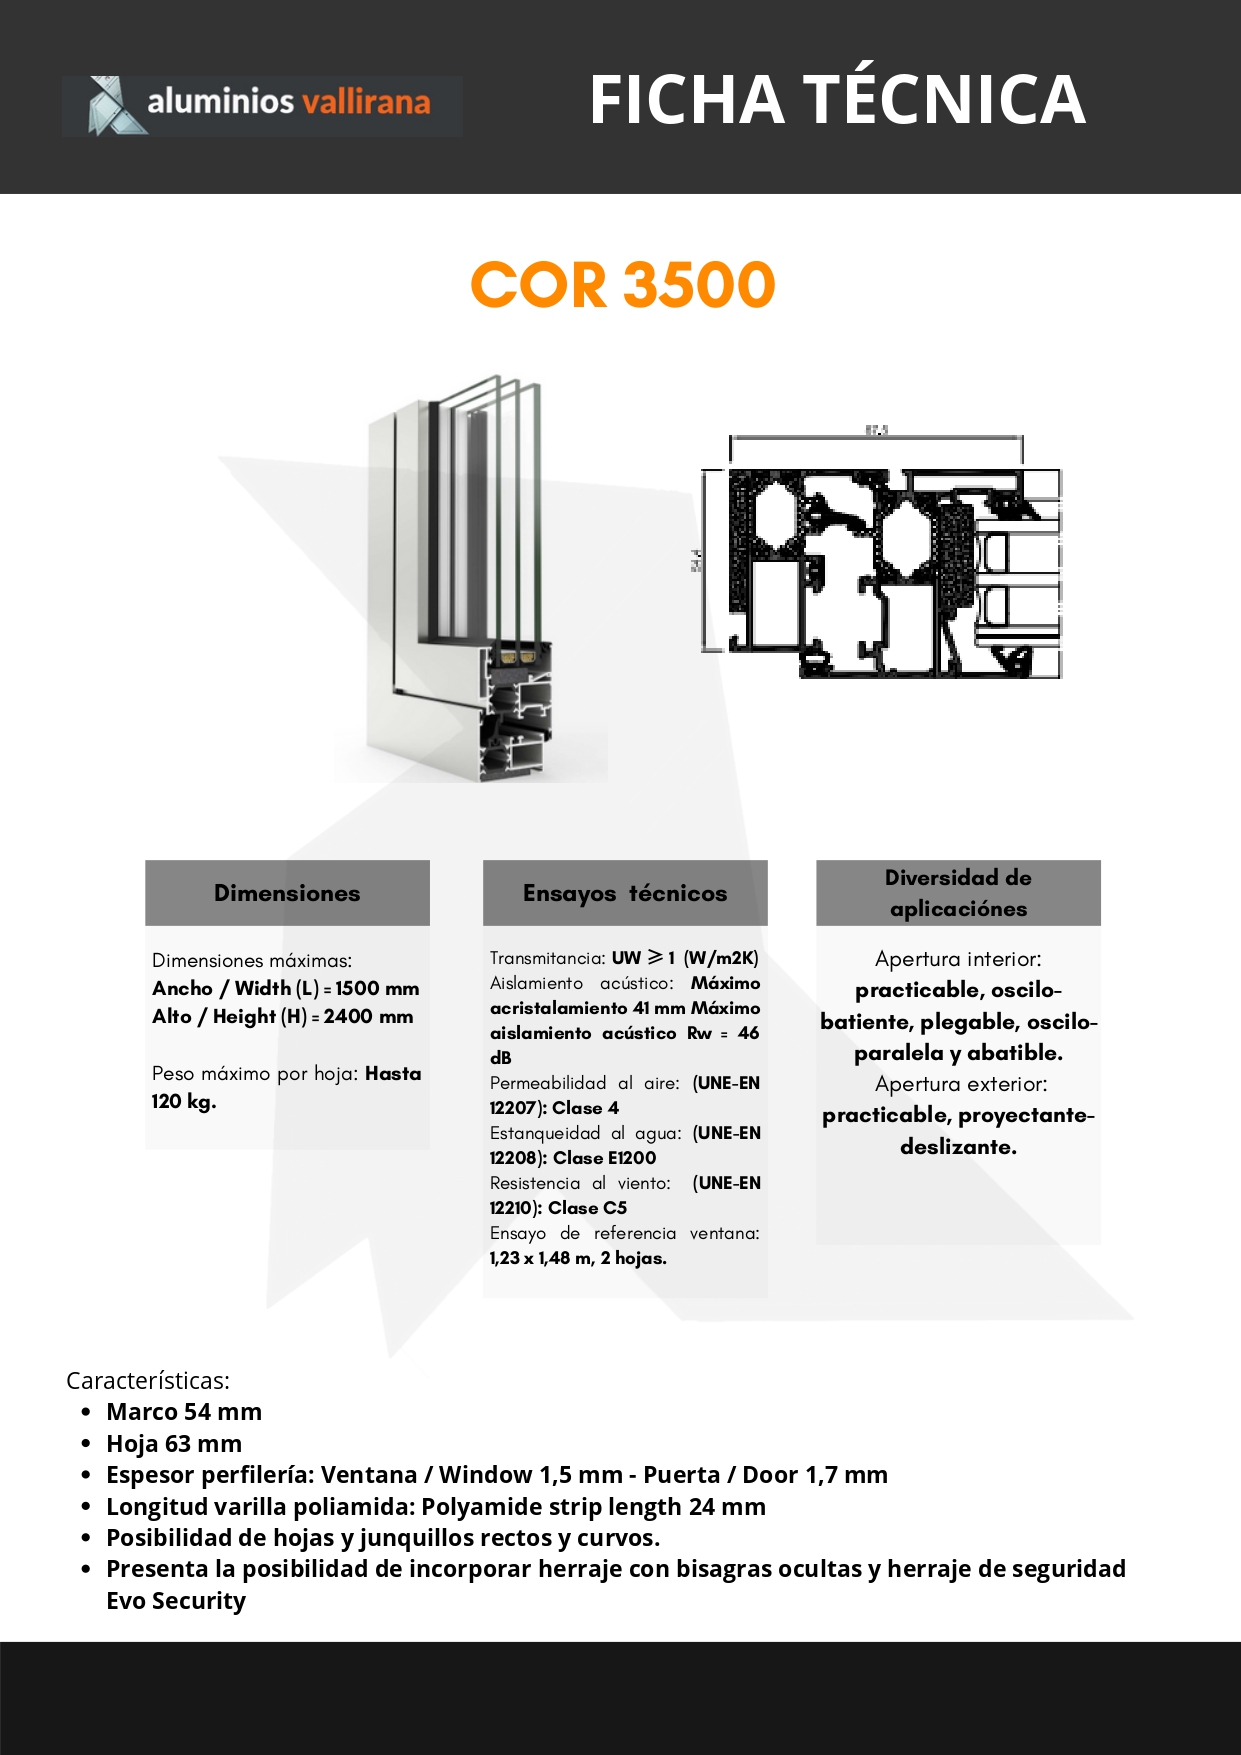 Ficha técnica COR 3500